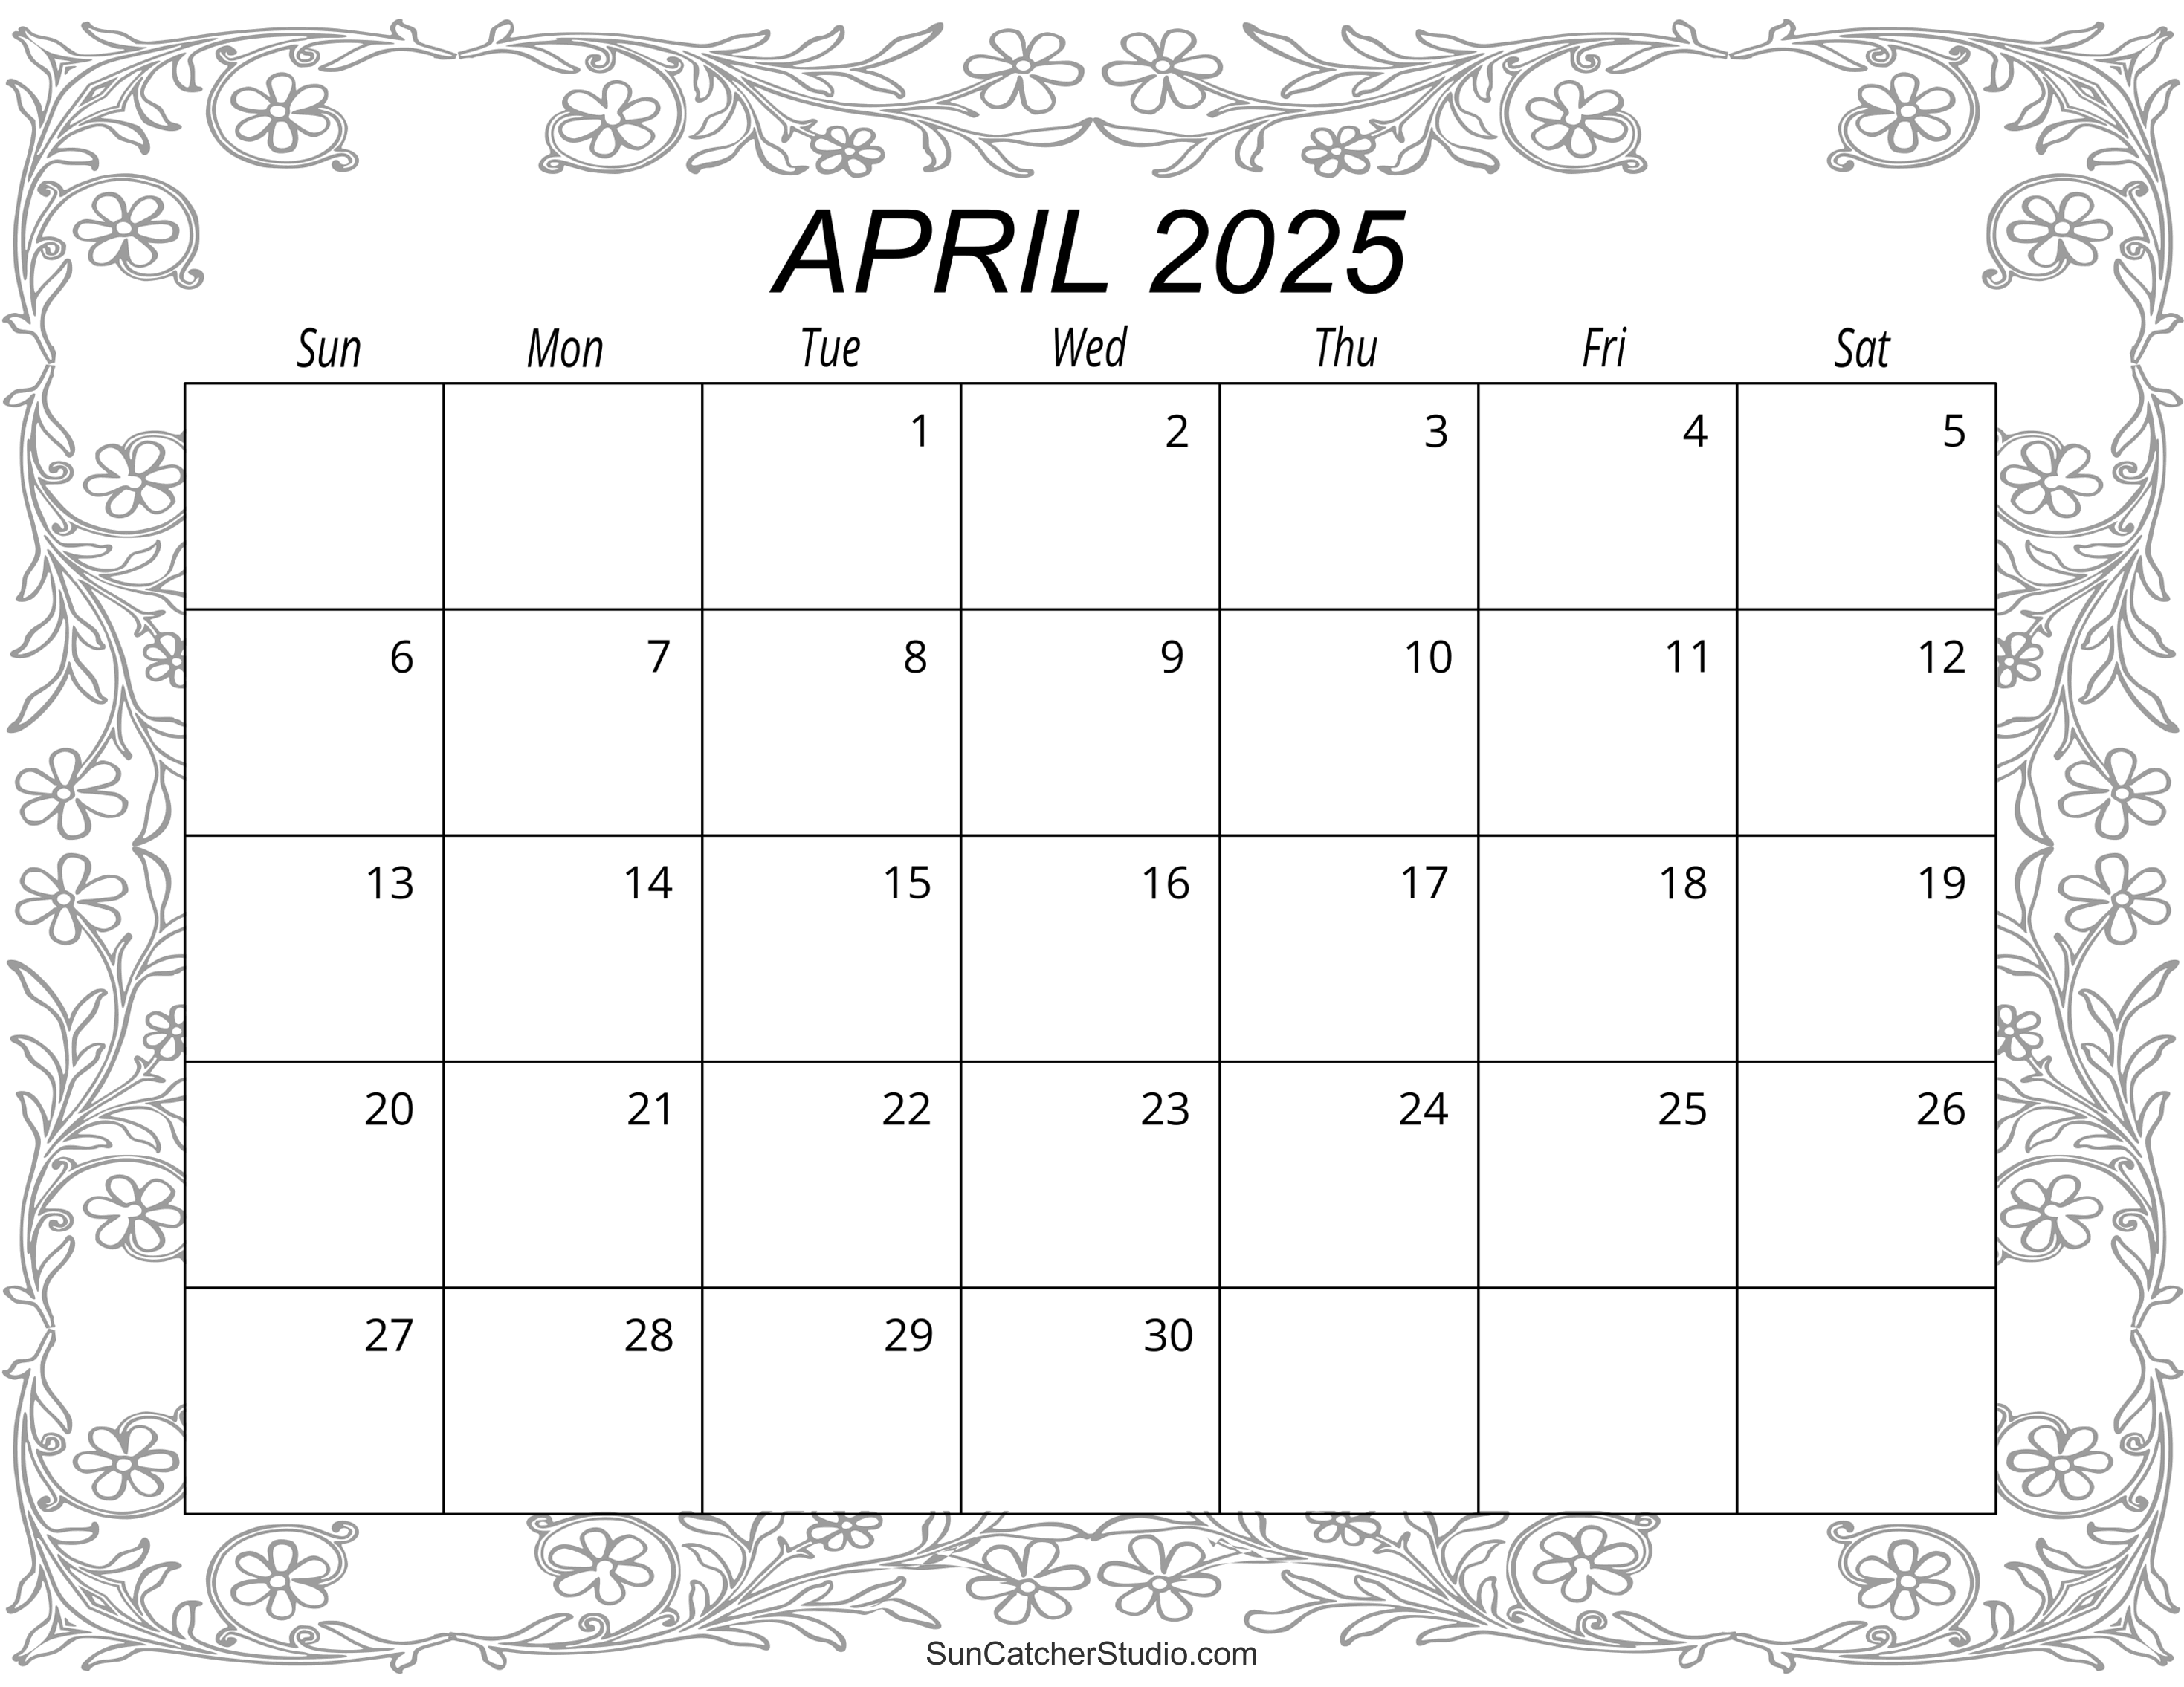 April 2025 Calendar (Free Printable) DIY Projects, Patterns